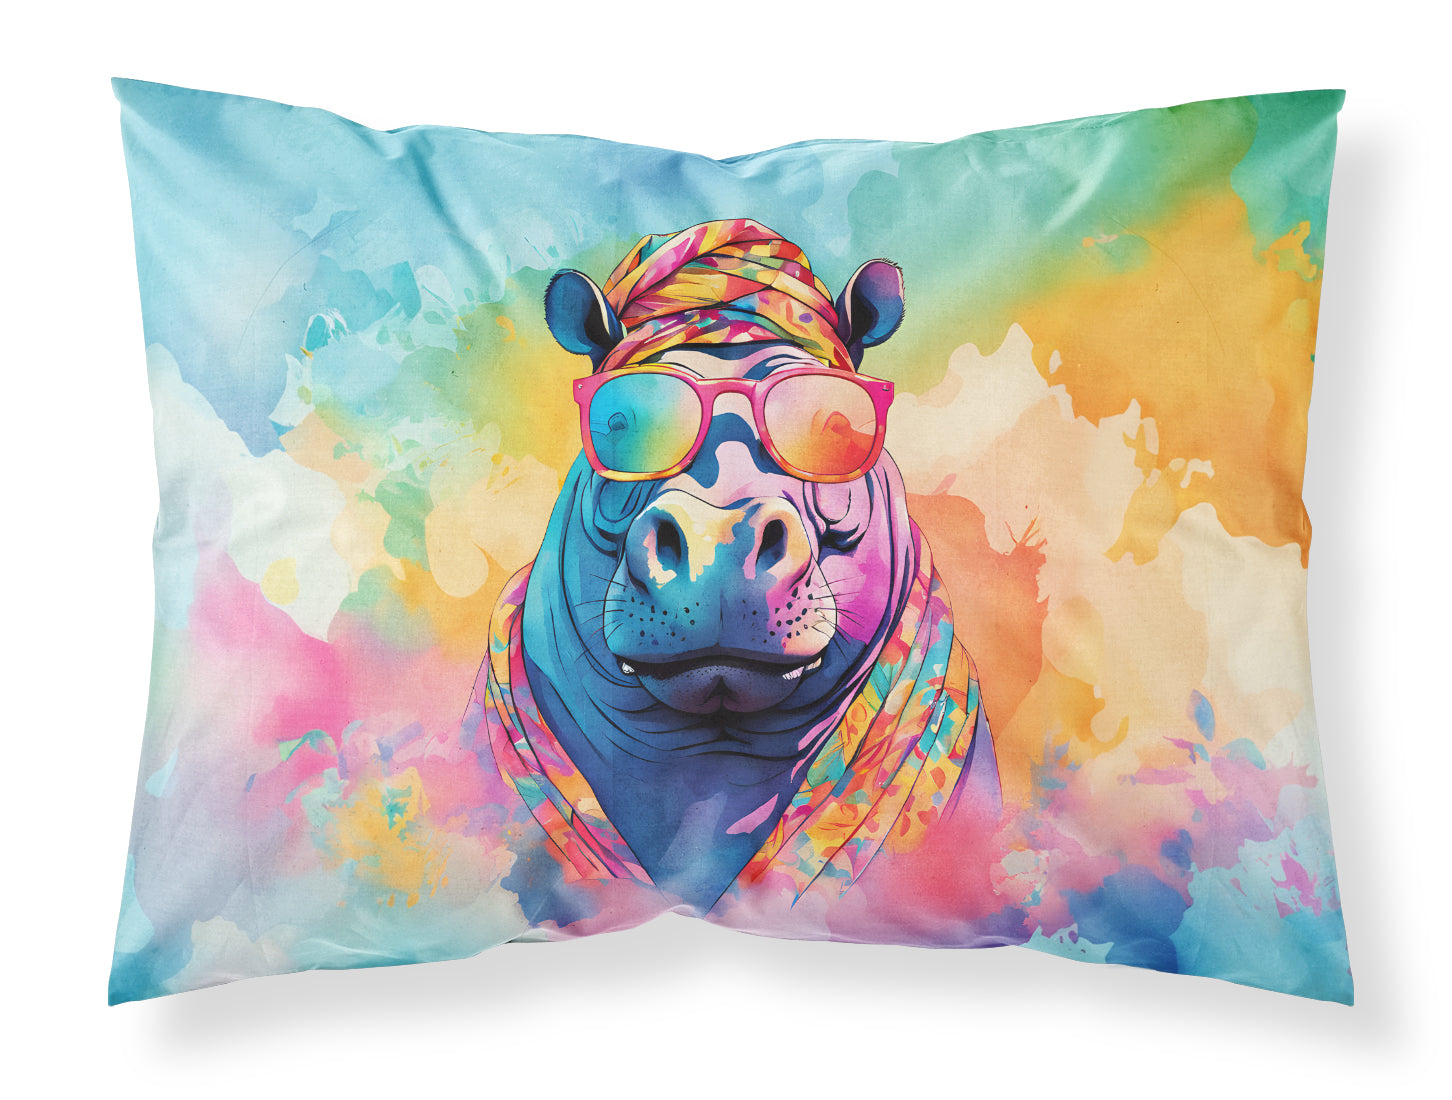 Buy this Hippie Animal Hippopotamus Standard Pillowcase